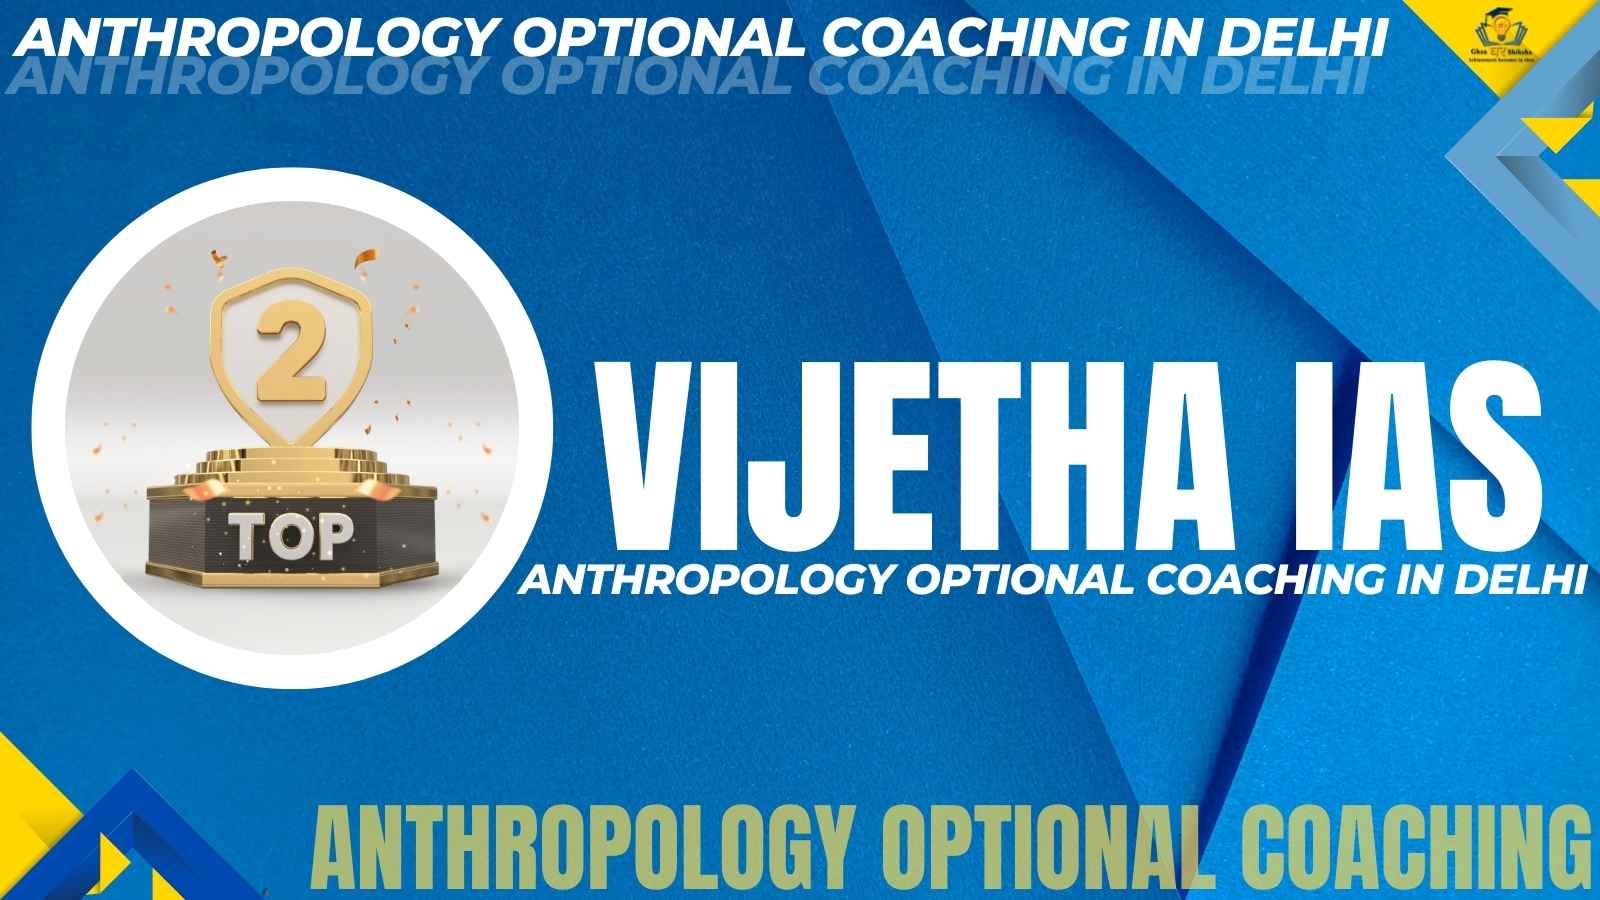 Best Anthropology Optional Coaching In Delhi